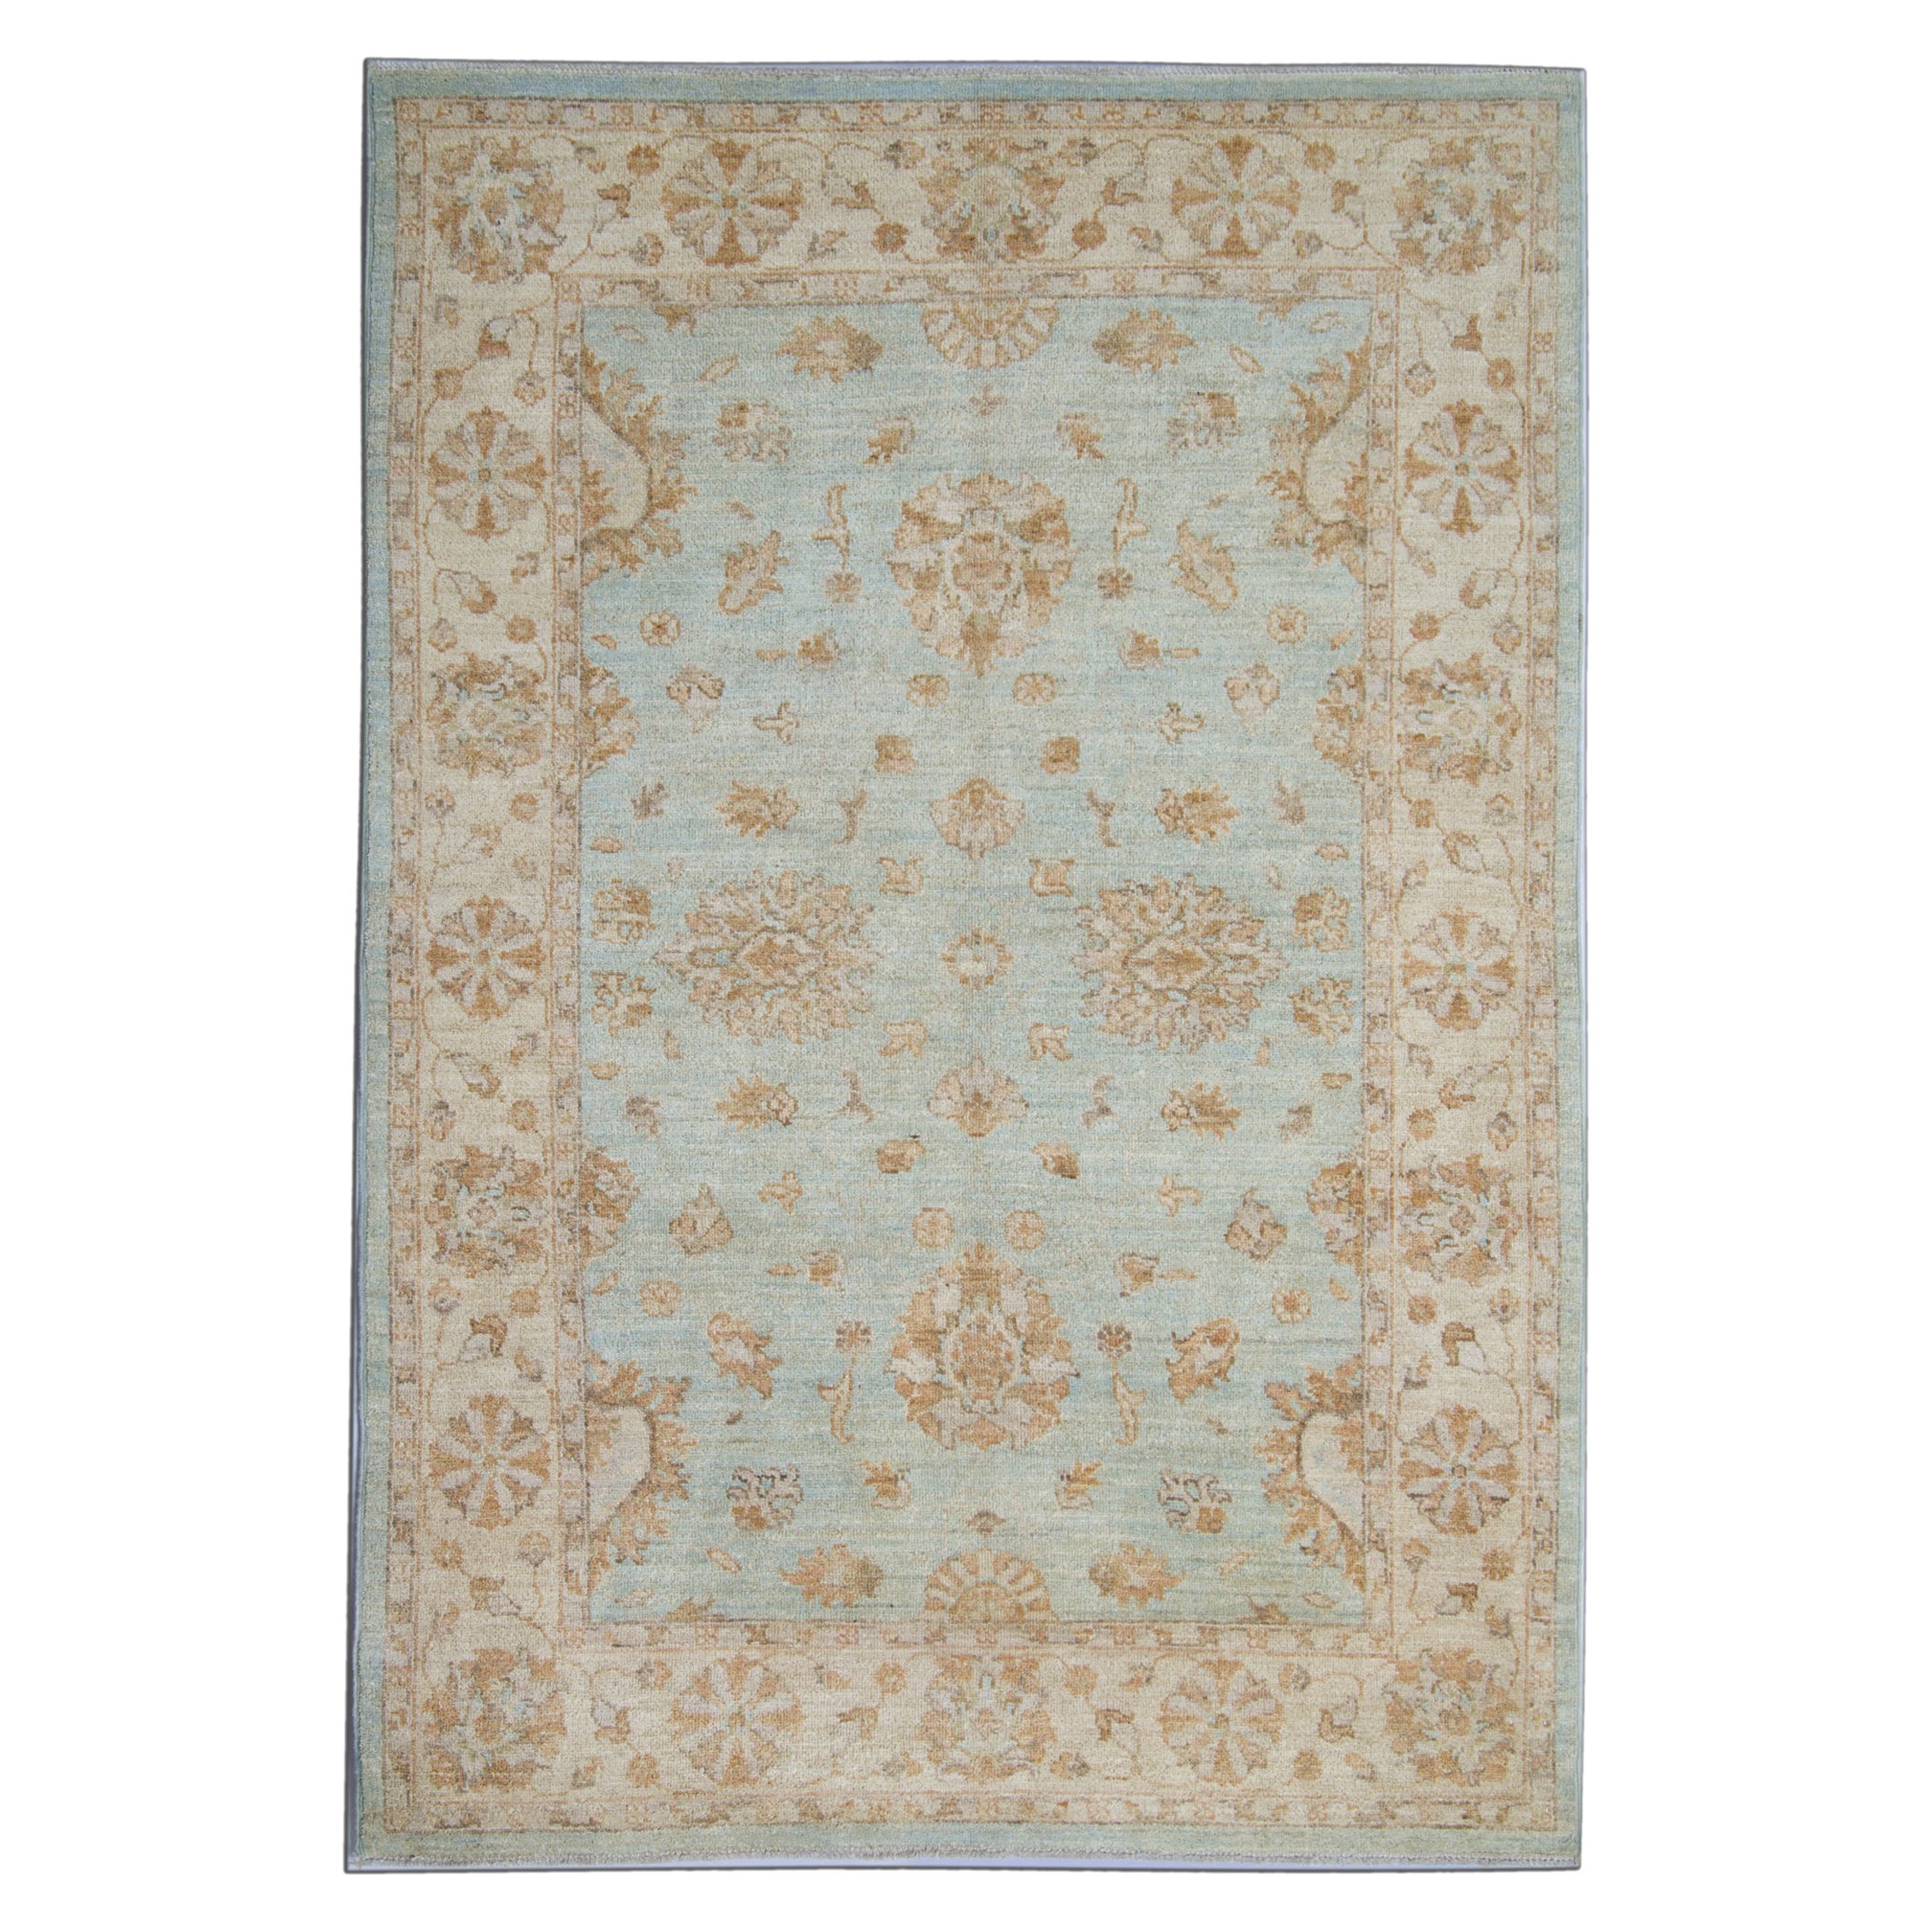 Handwoven Blue Rug Carpet Traditional Floral Area Rug All Over Design For Sale